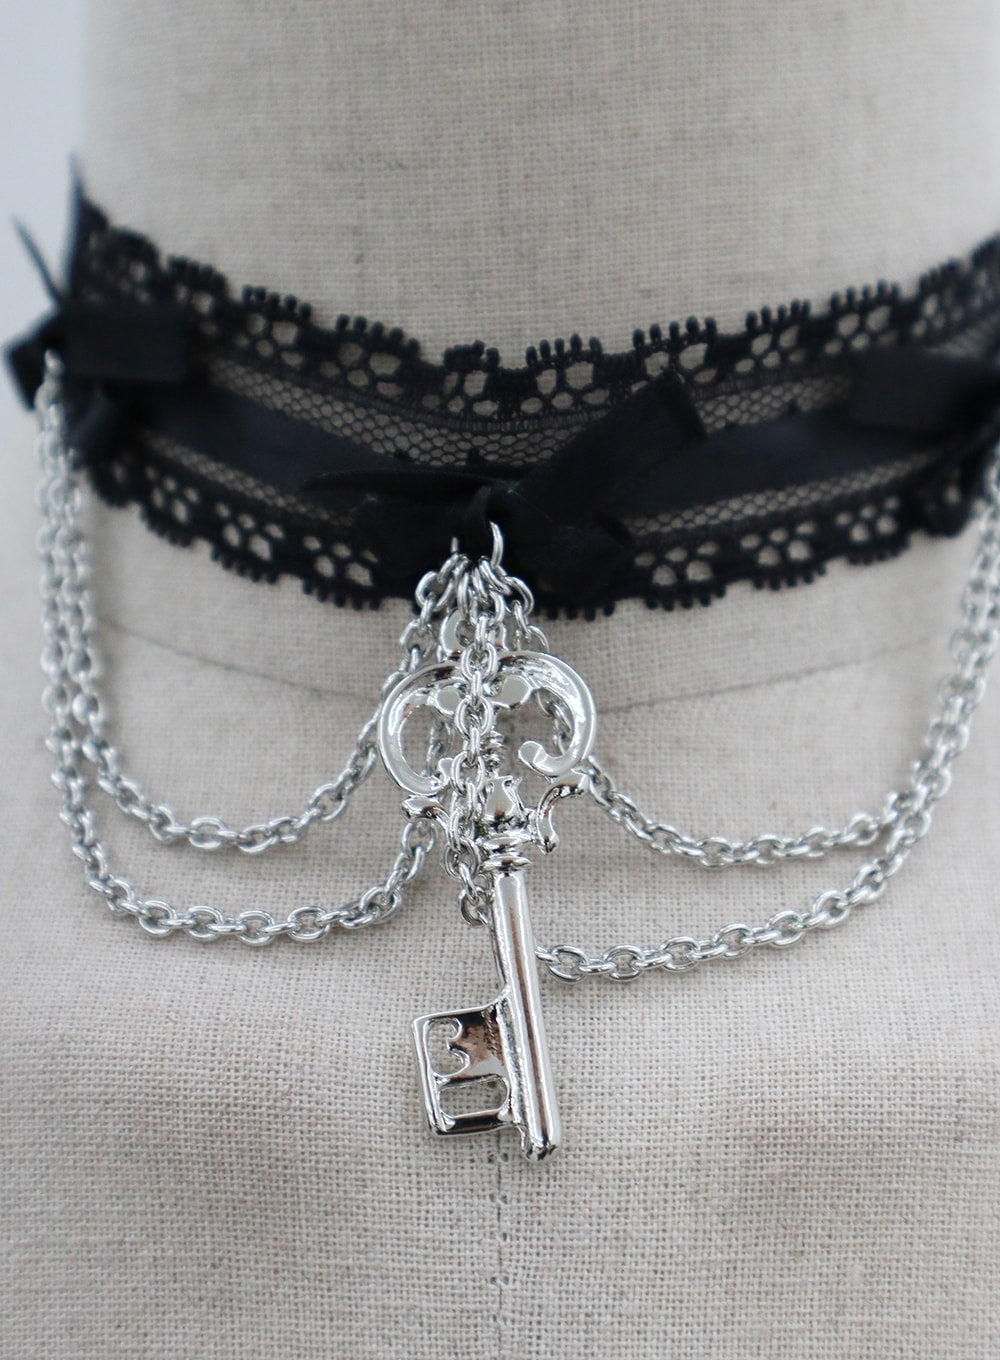 Key Chain Choker Necklace BD09 - Light Gray One Size